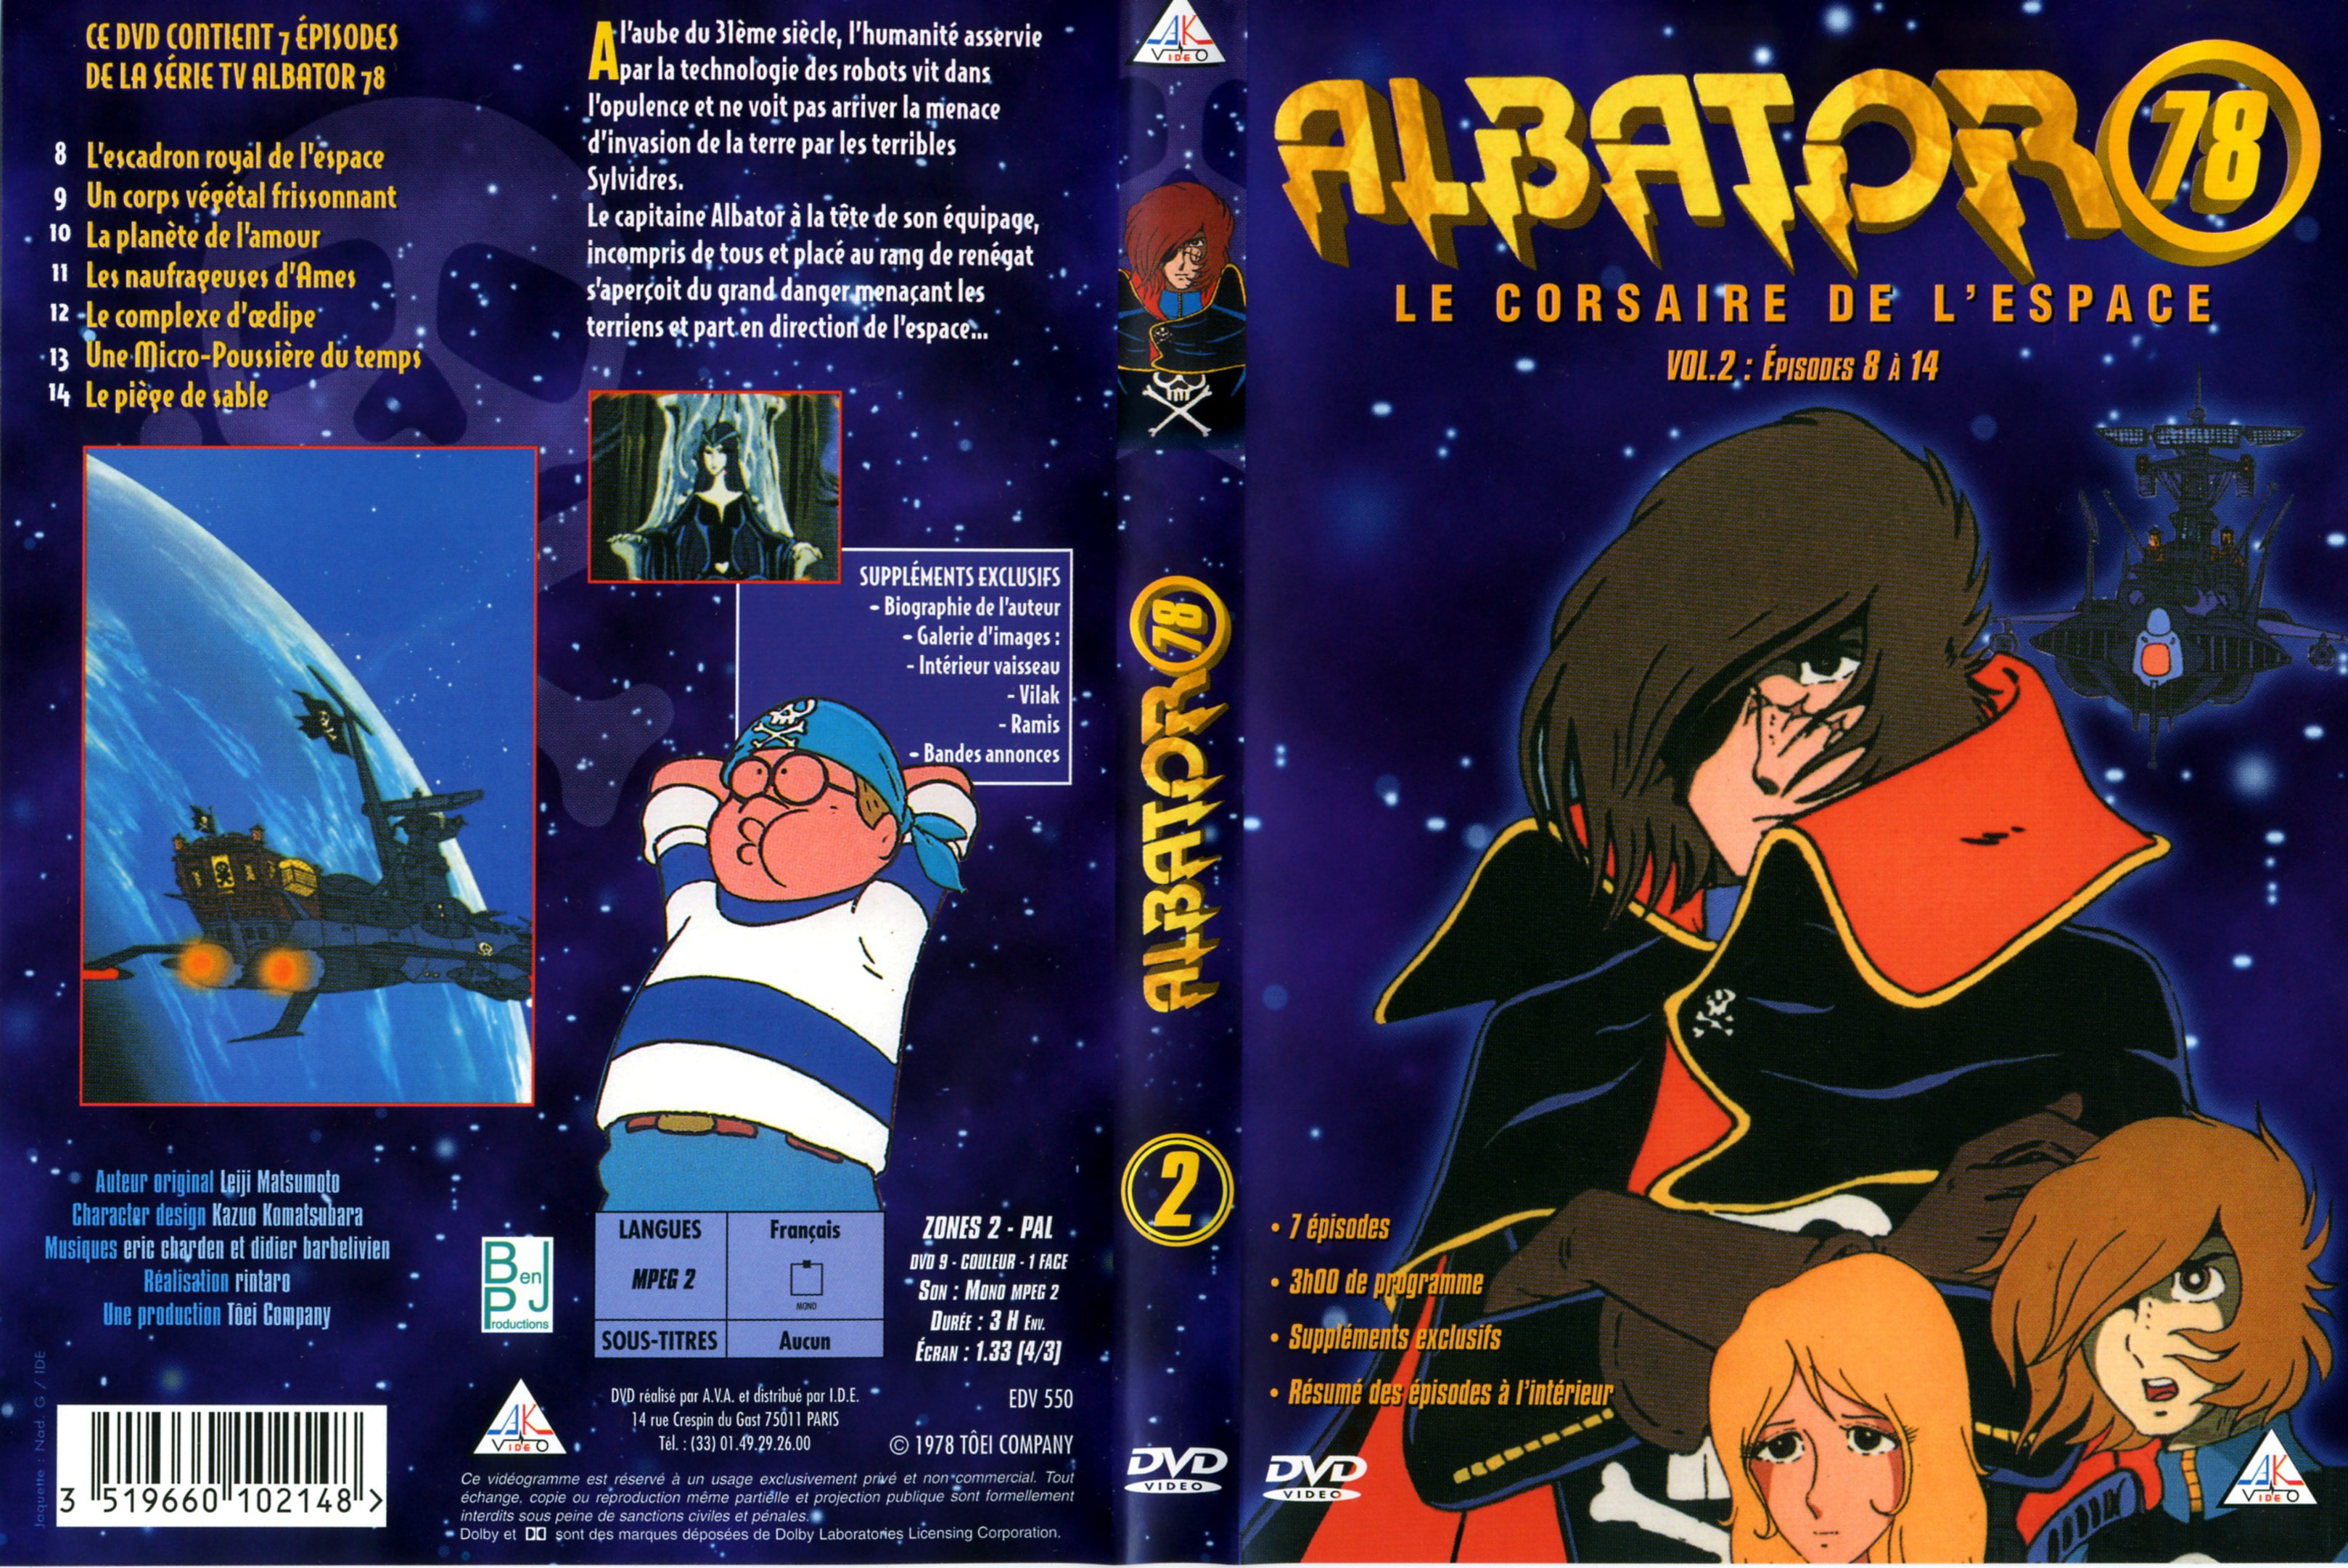 Jaquette DVD Albator 78 vol 2 (AK VIDEO)